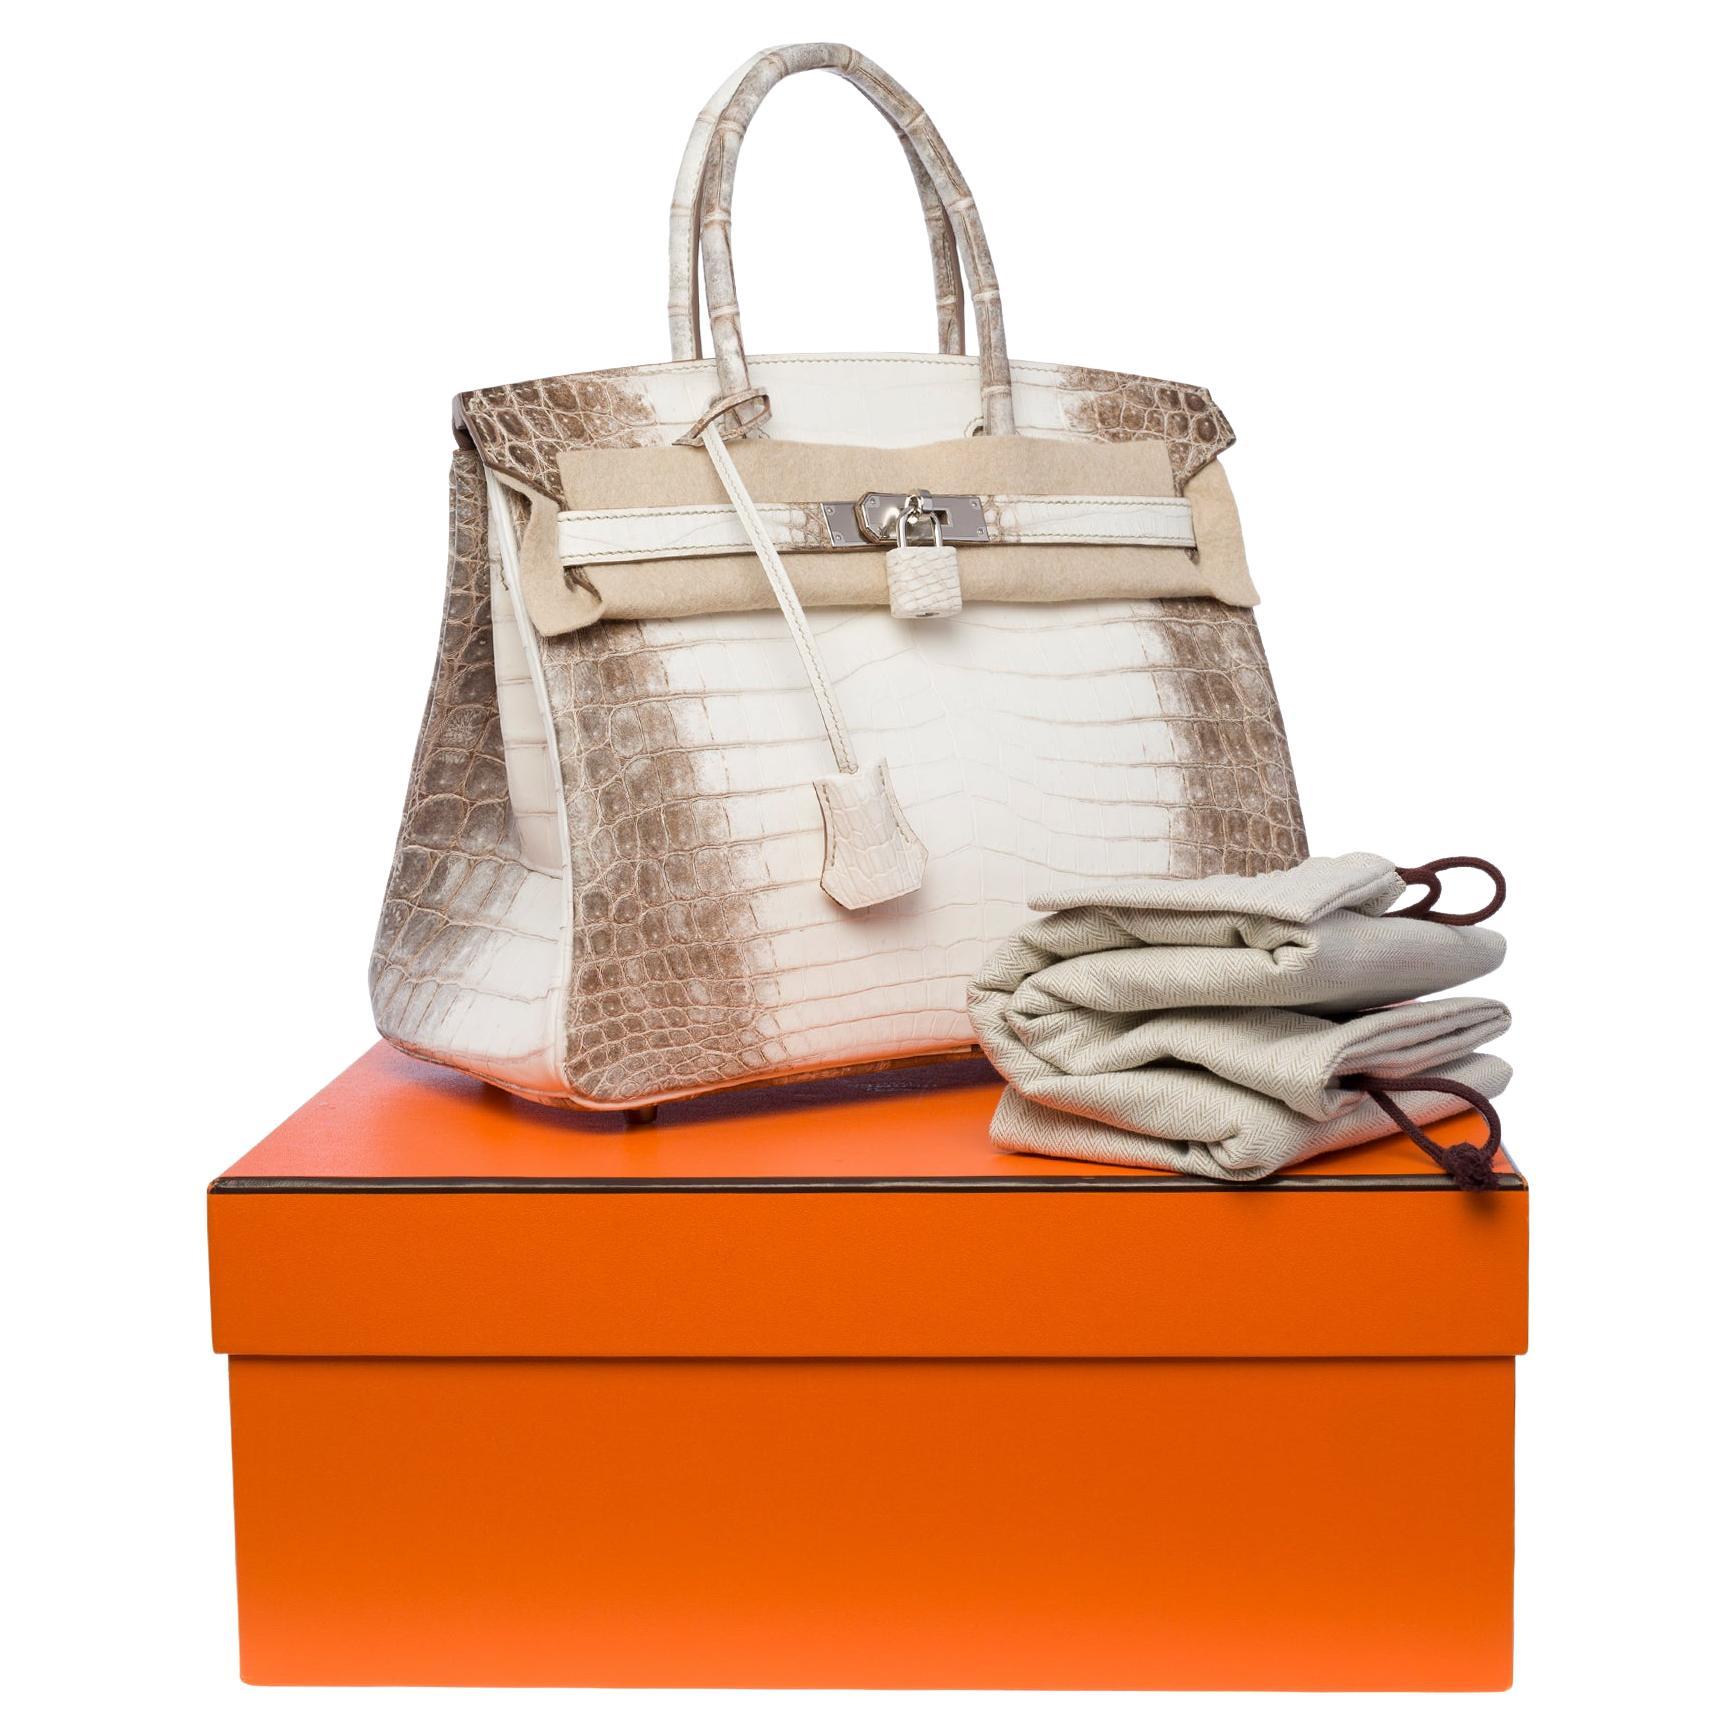 Rare New Hermès Birkin 30 Himalaya handbag in white Nile Crocodile leather, SHW